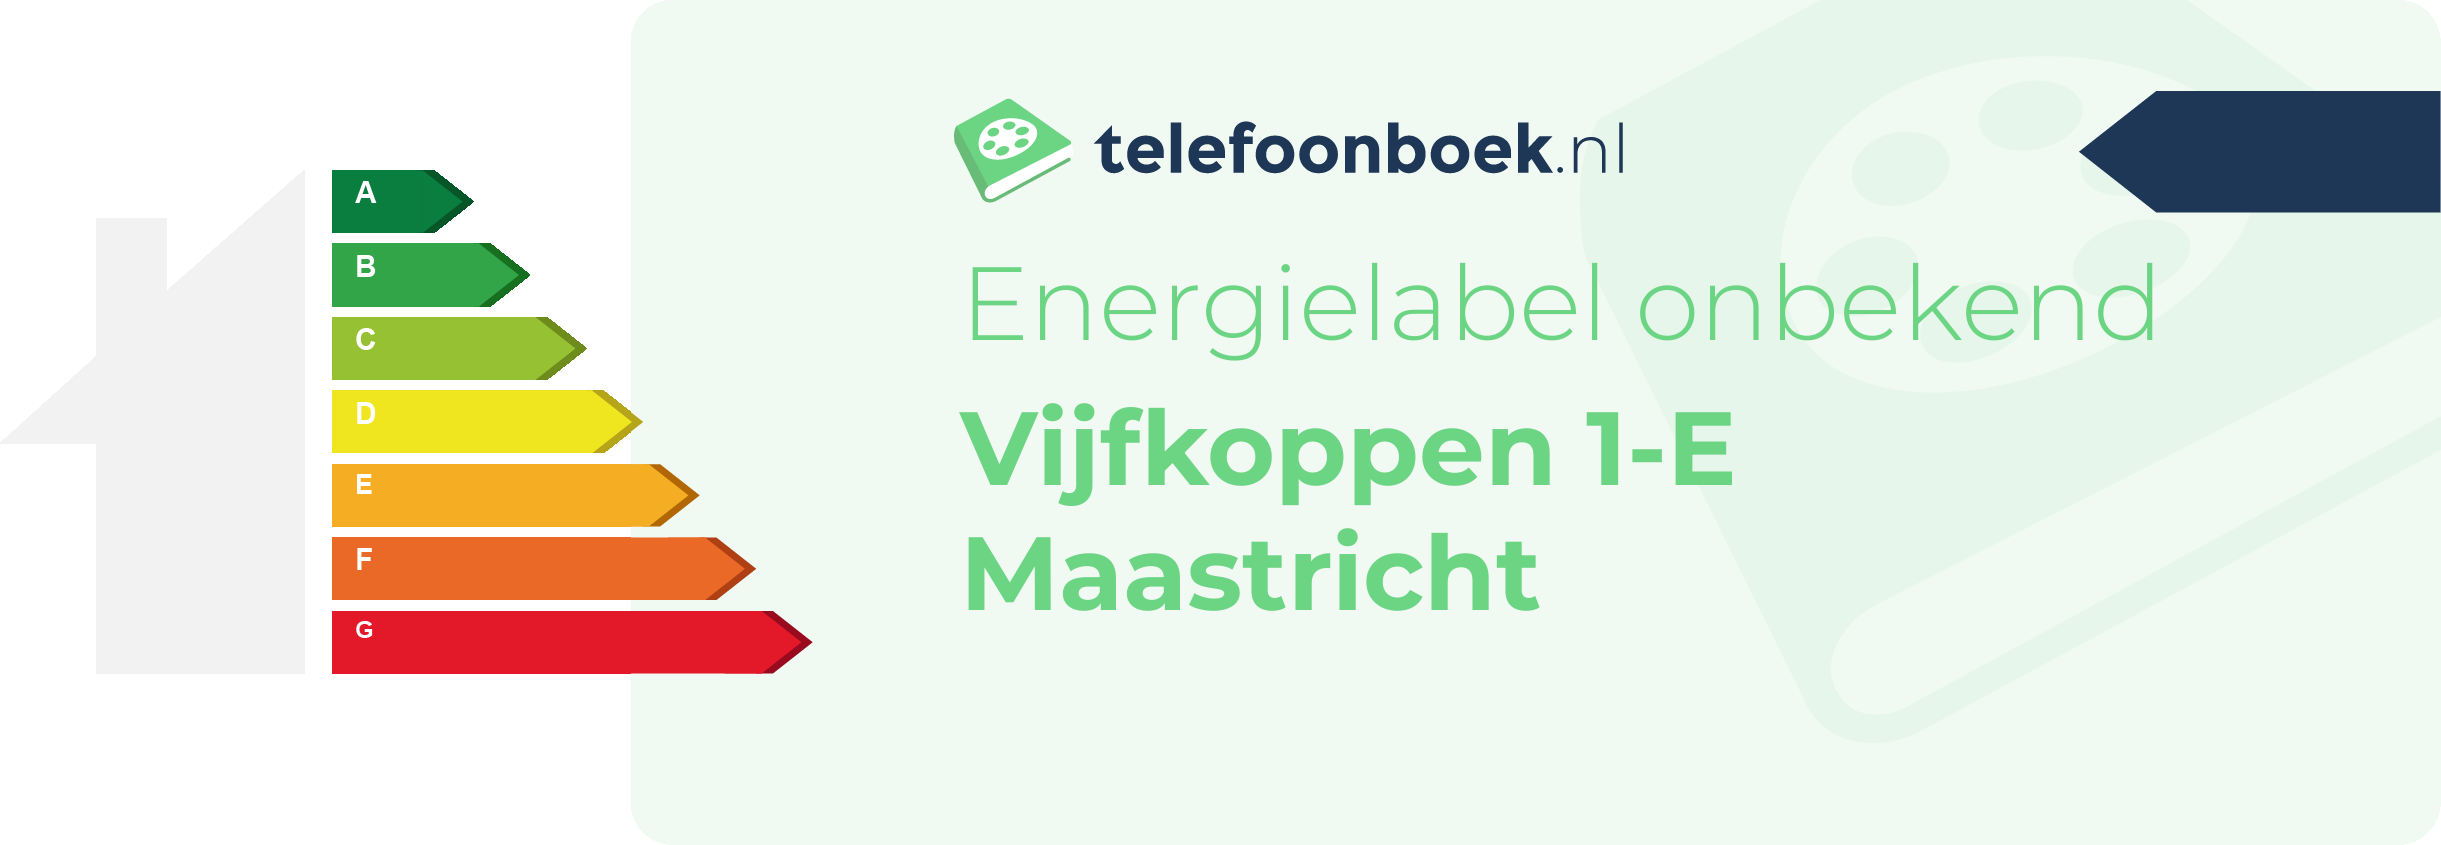 Energielabel Vijfkoppen 1-E Maastricht